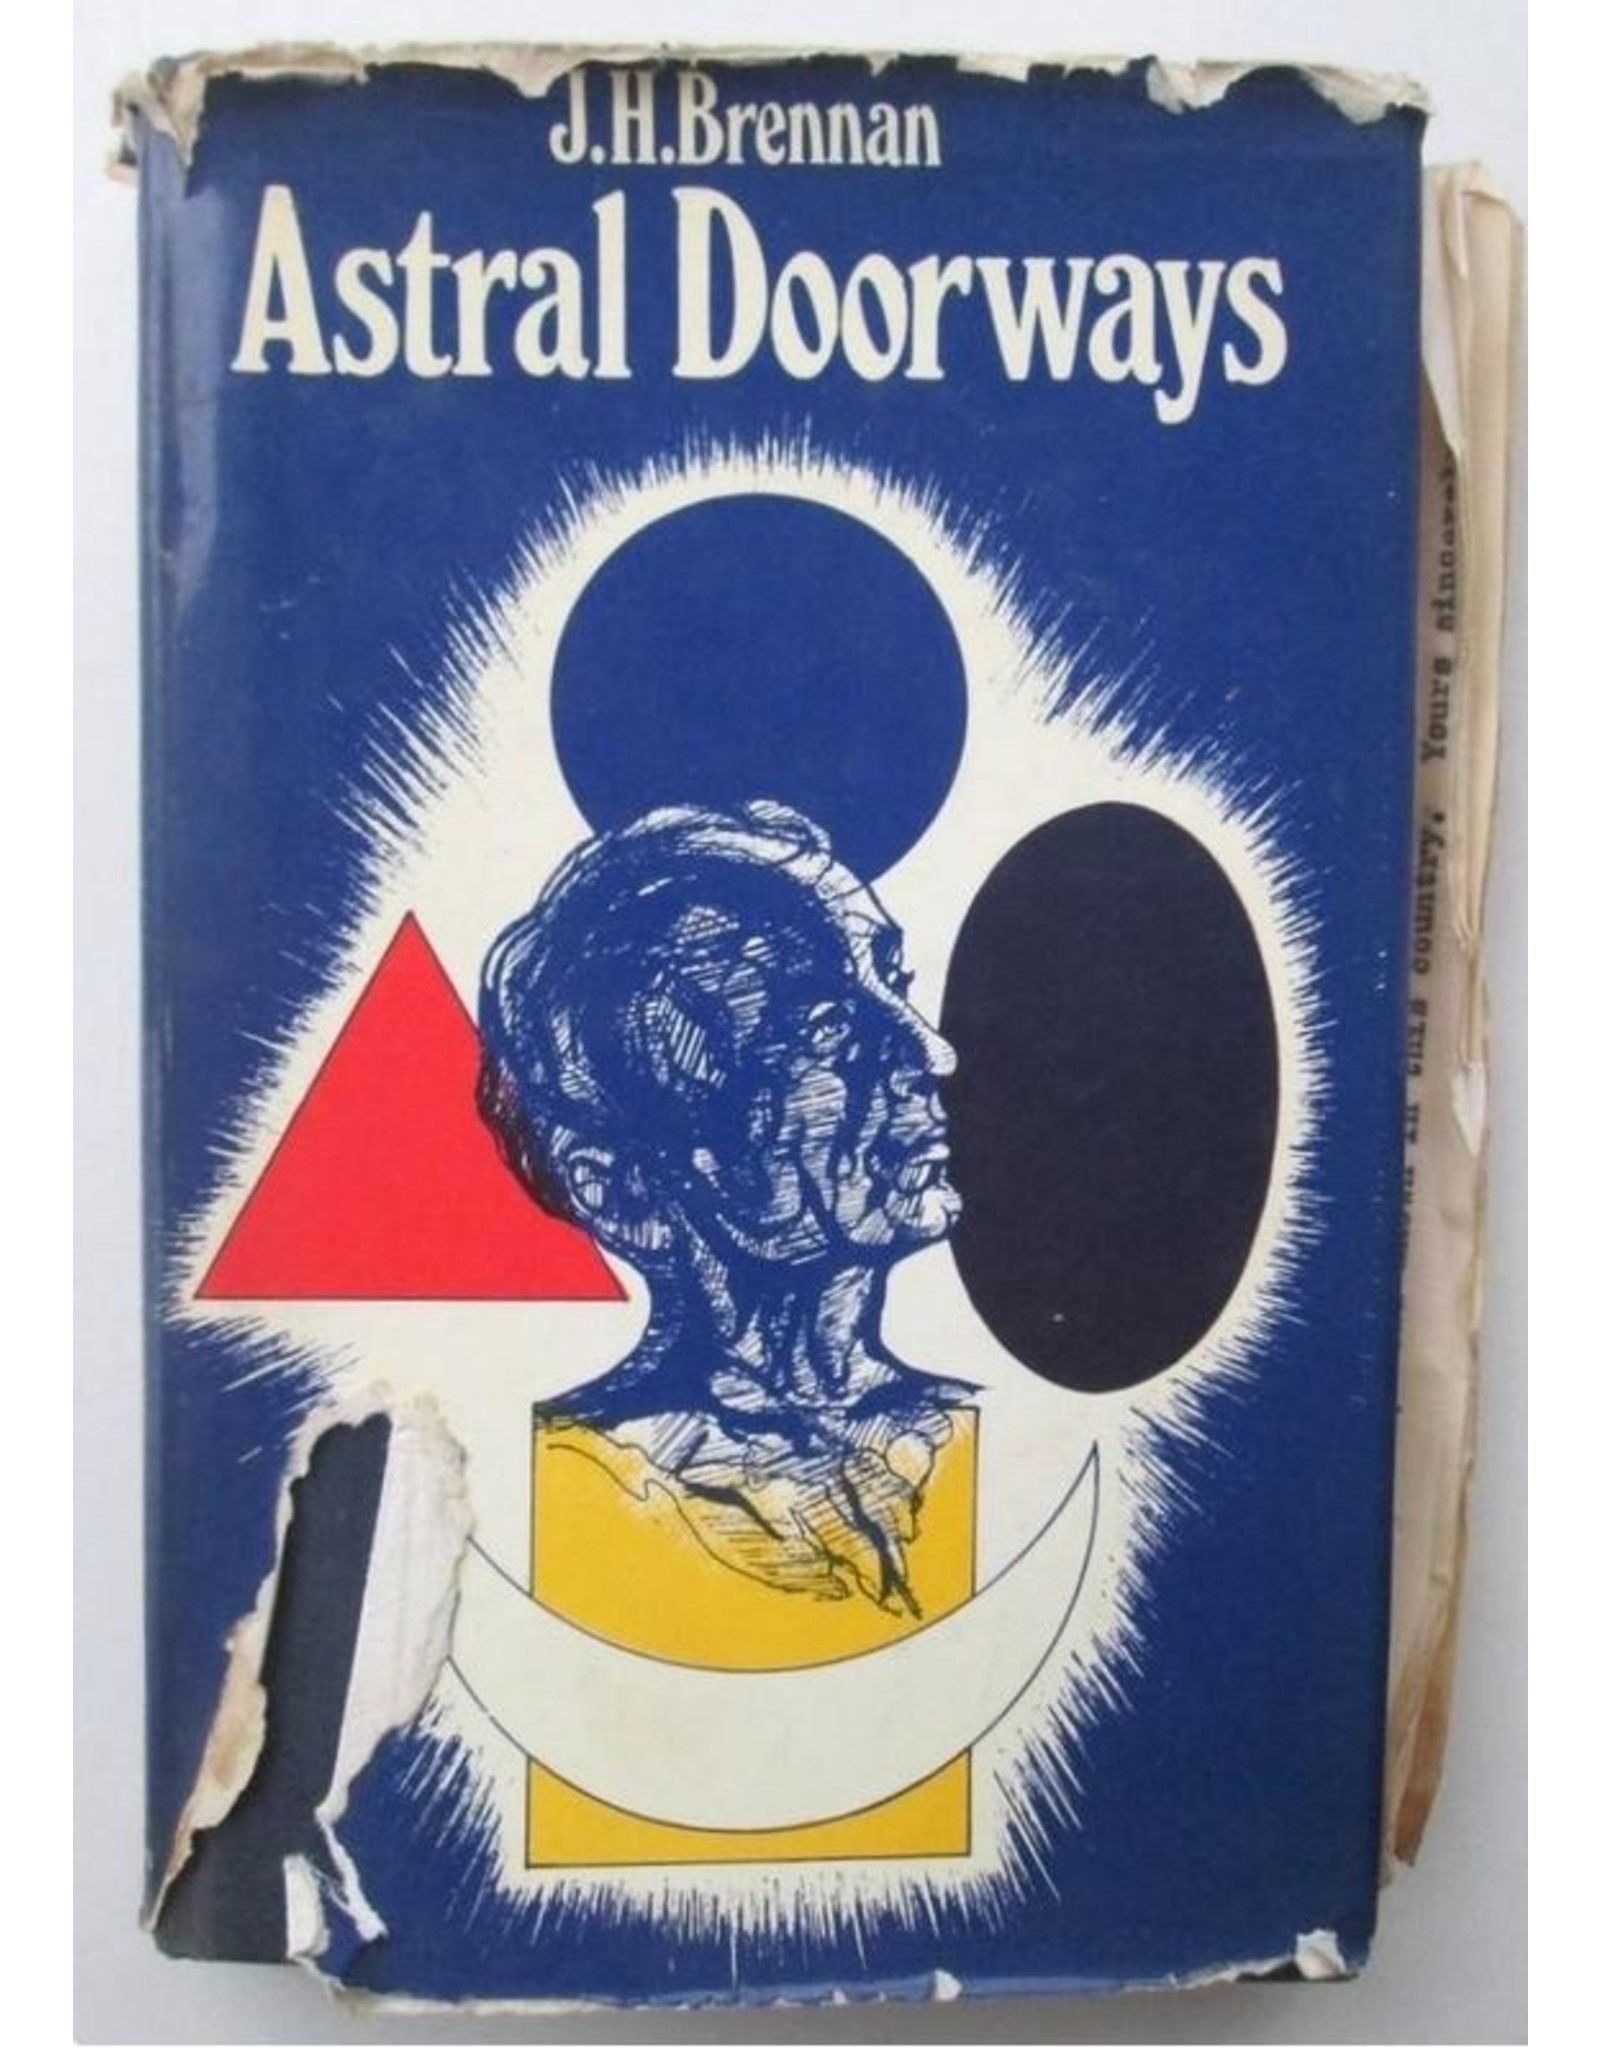 J.H. Brennan - Astral Doorways